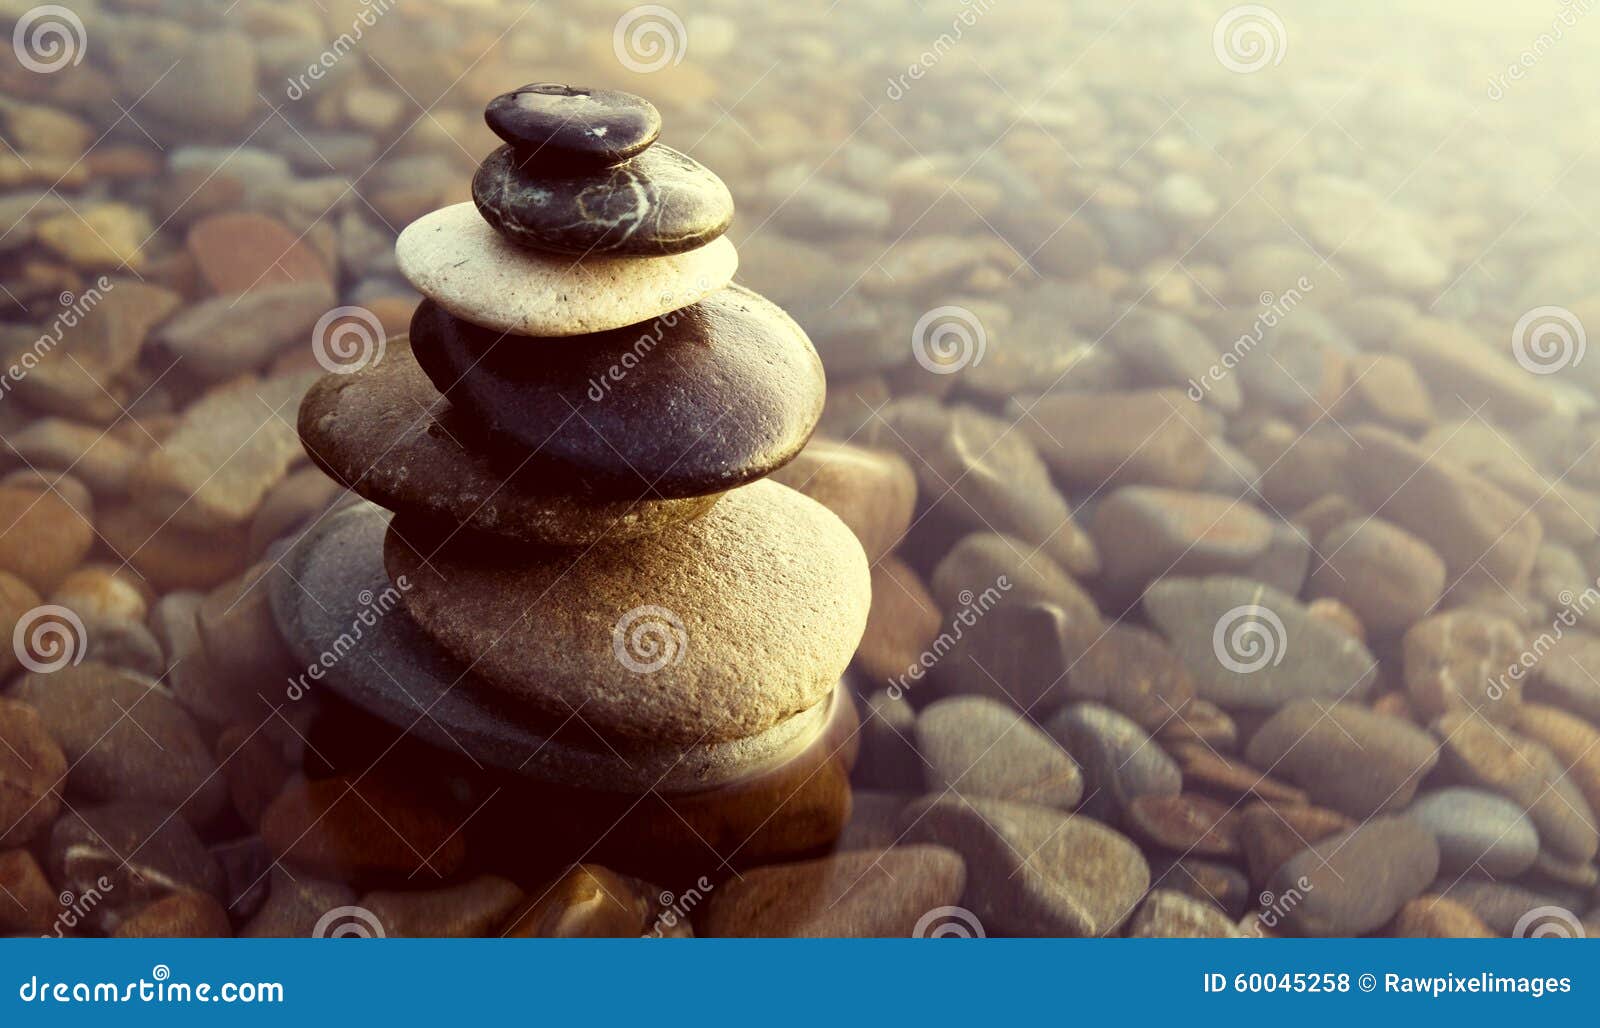 zen balance rocks pebbles covered water concept